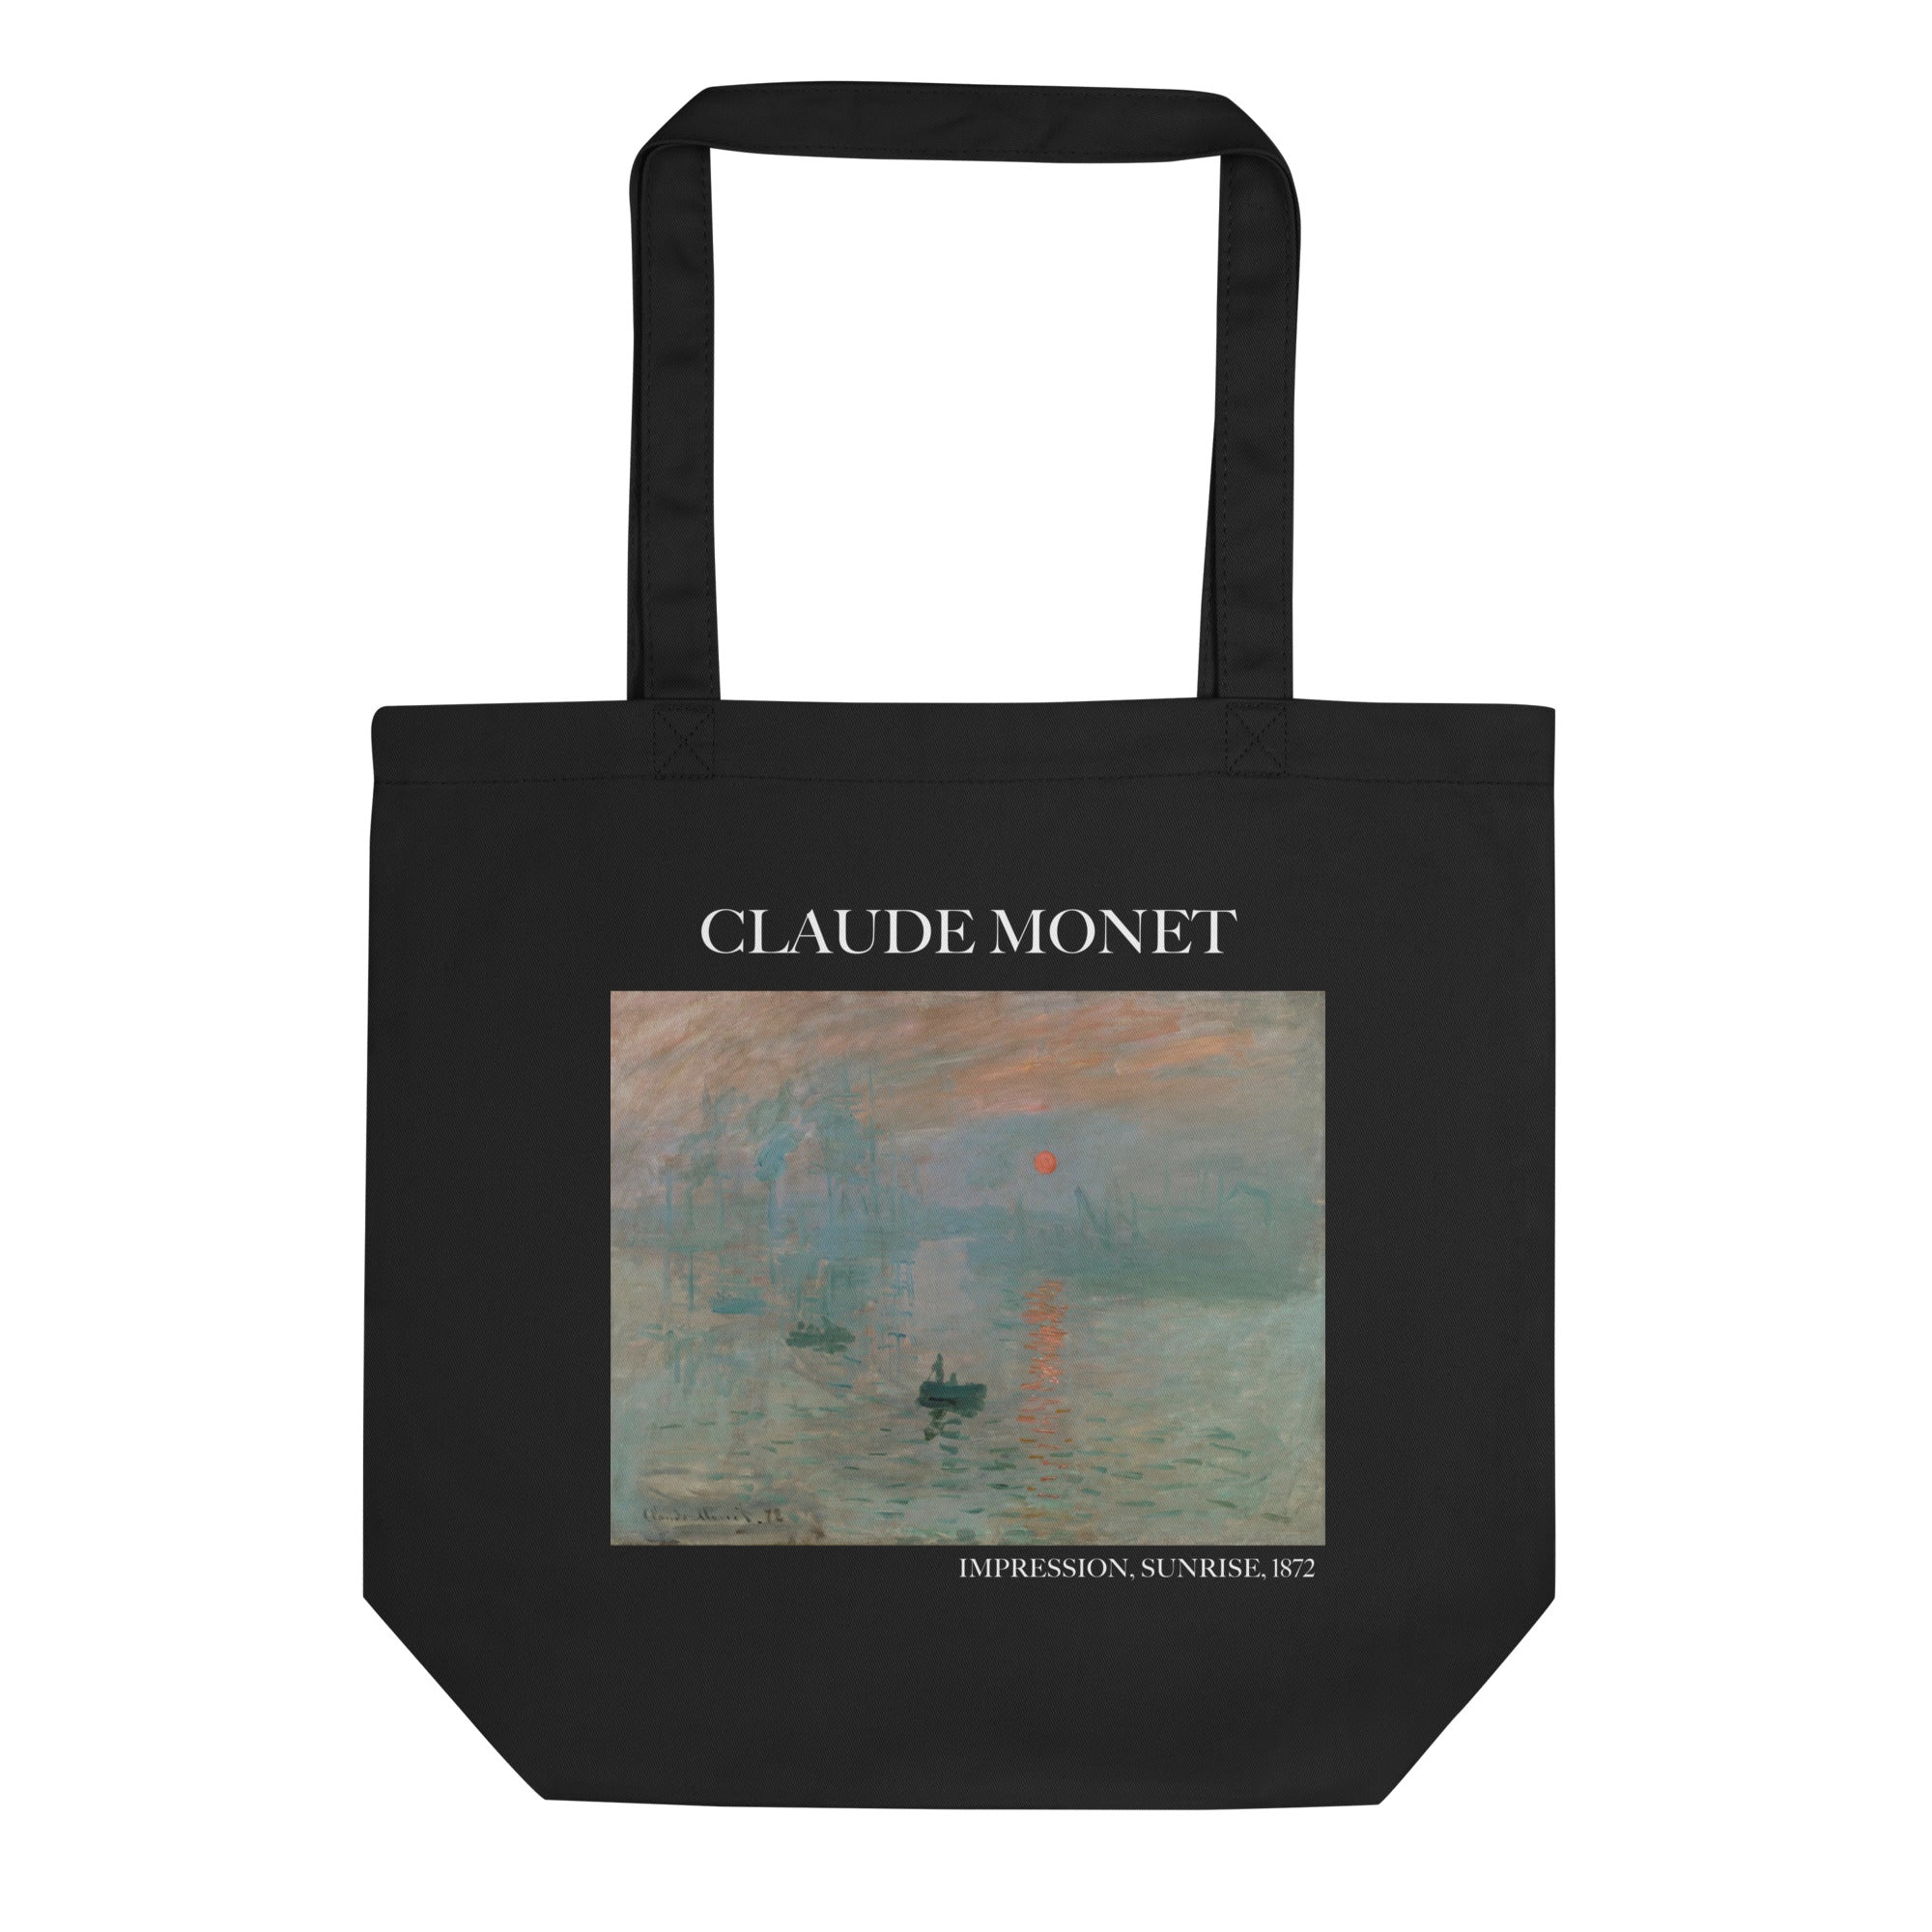 Claude Monet 'Impression, Sunrise' Famous Painting Totebag | Eco Friendly Art Tote Bag